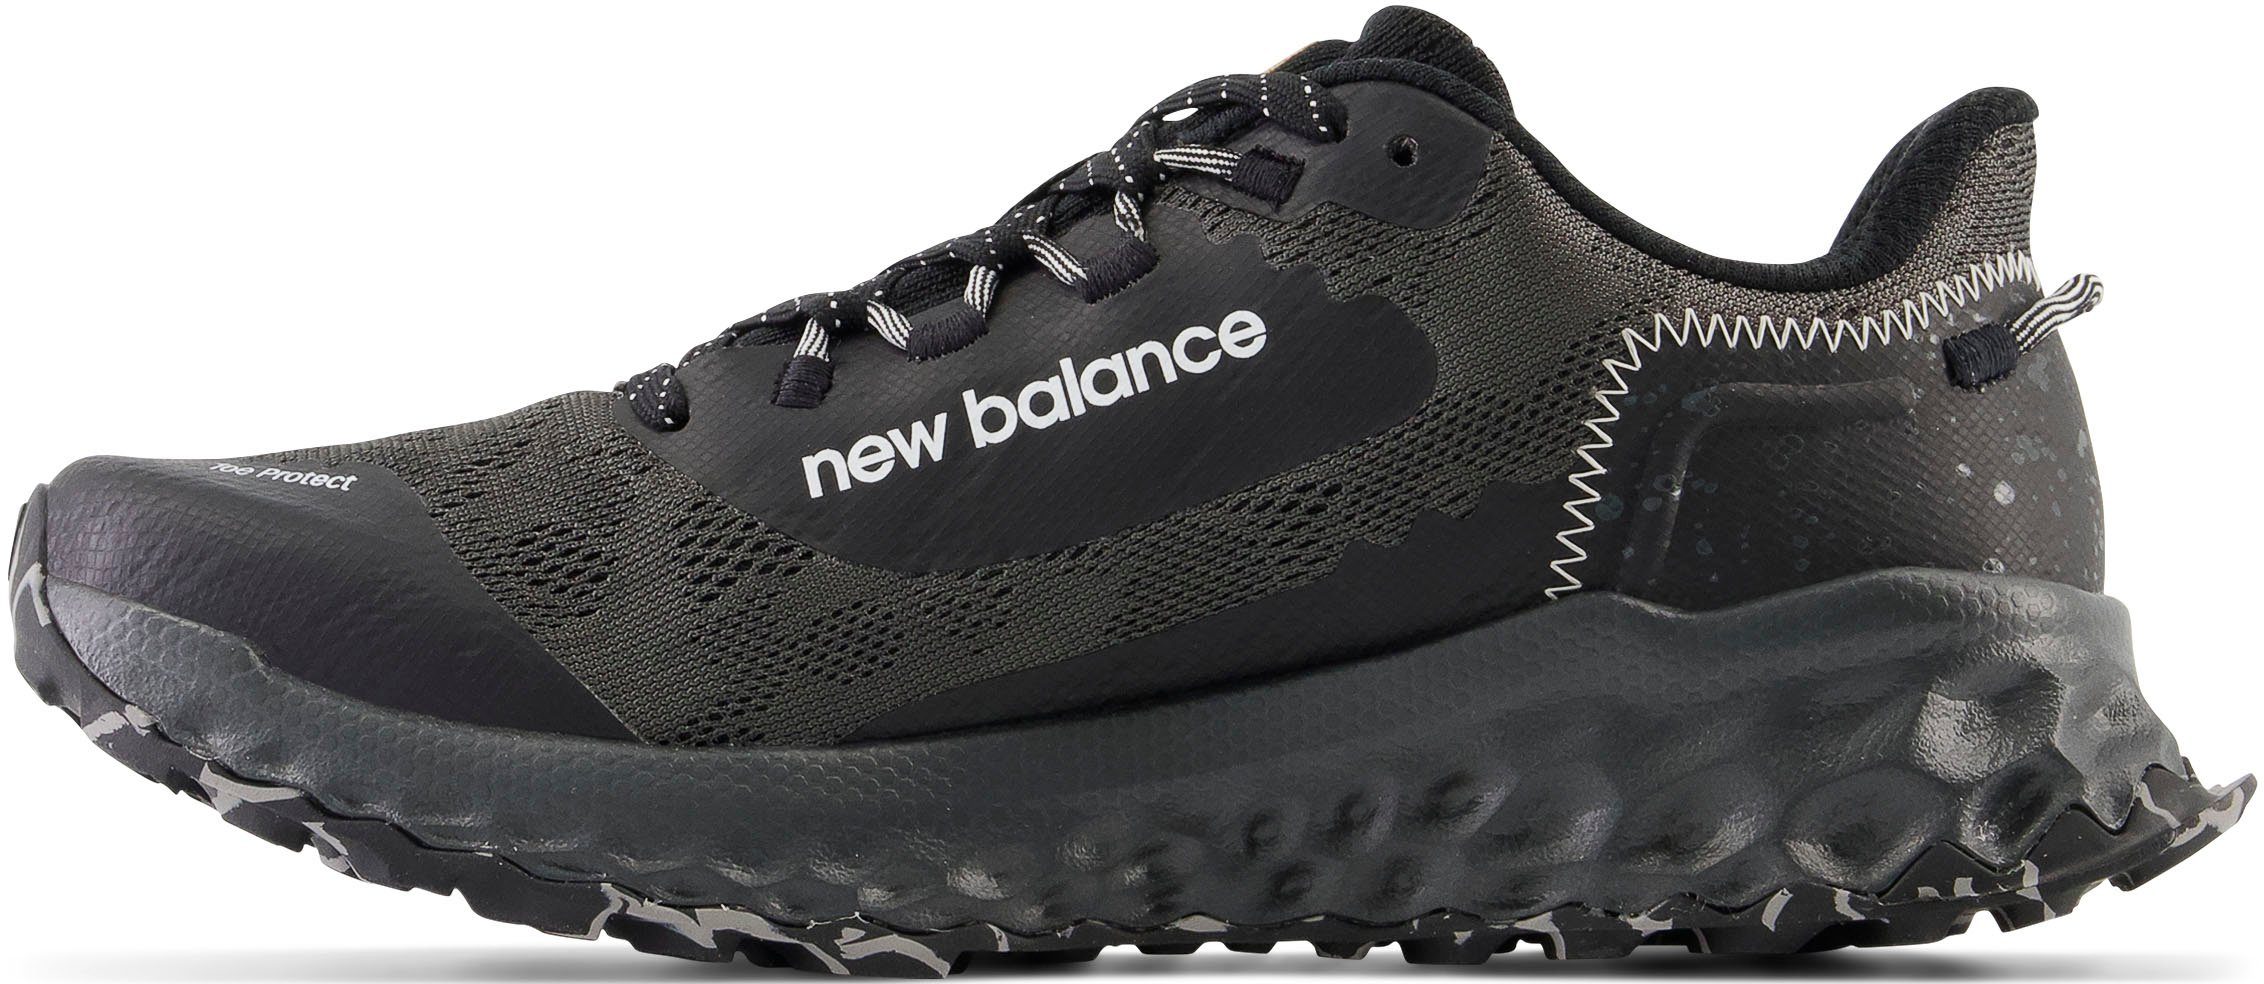 GARO New Balance Trailrunningschuh schwarz-grau